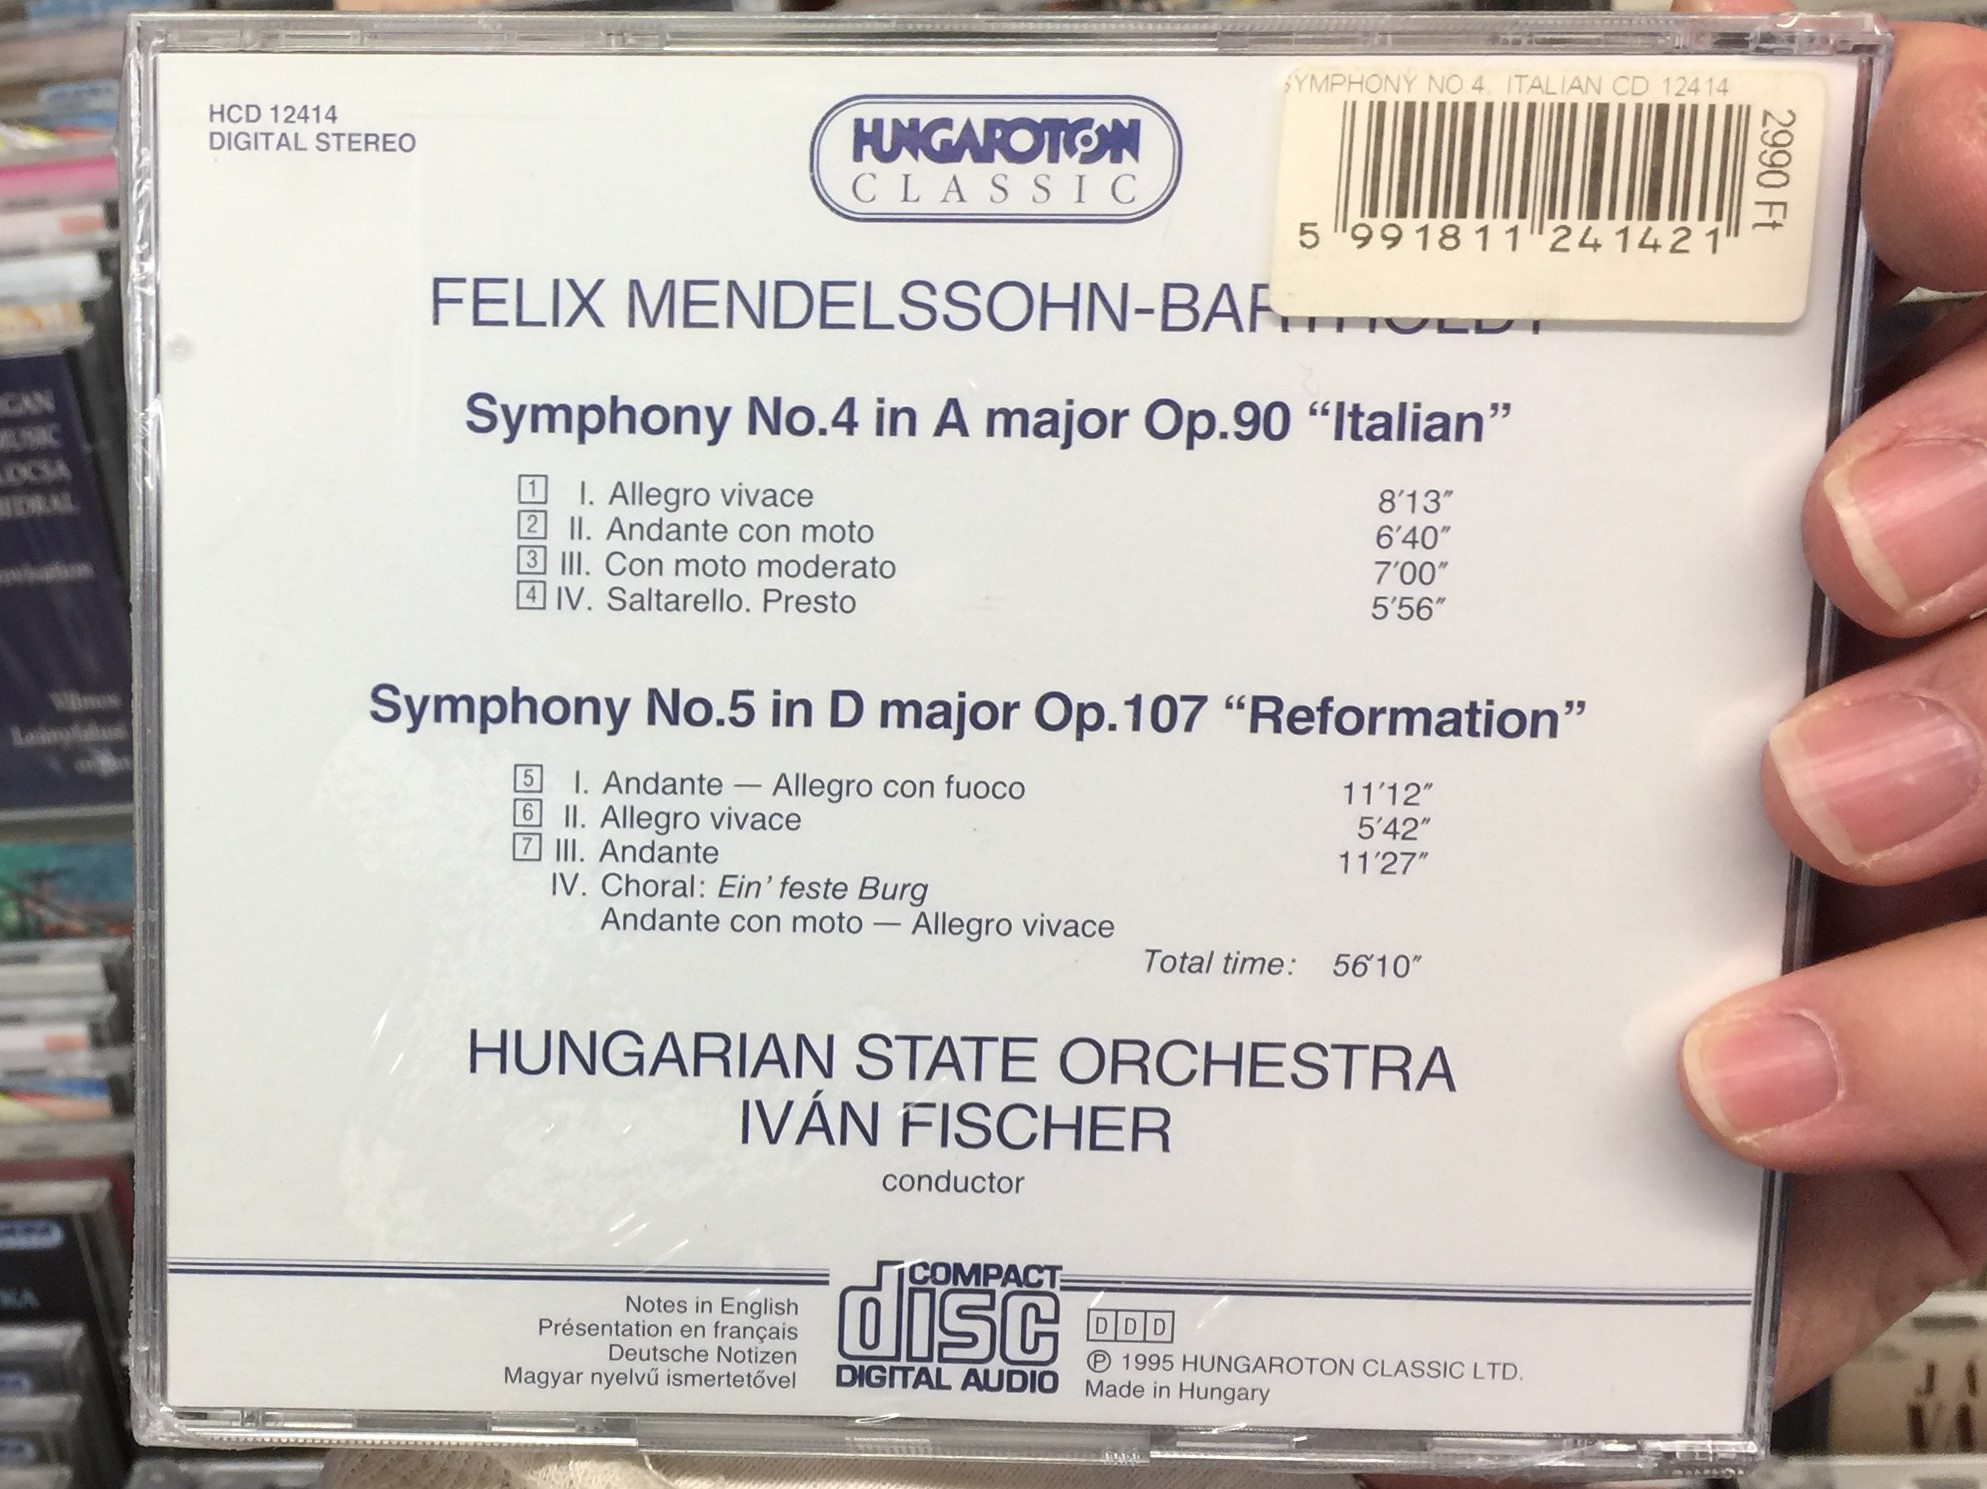 mendelssohn-symphony-no.4-italian-symphony-no.5-reformation-hungarian-state-orchestra-iv-n-fischer-hungaroton-classic-audio-cd-1995-stereo-hcd-12414-2-.jpg